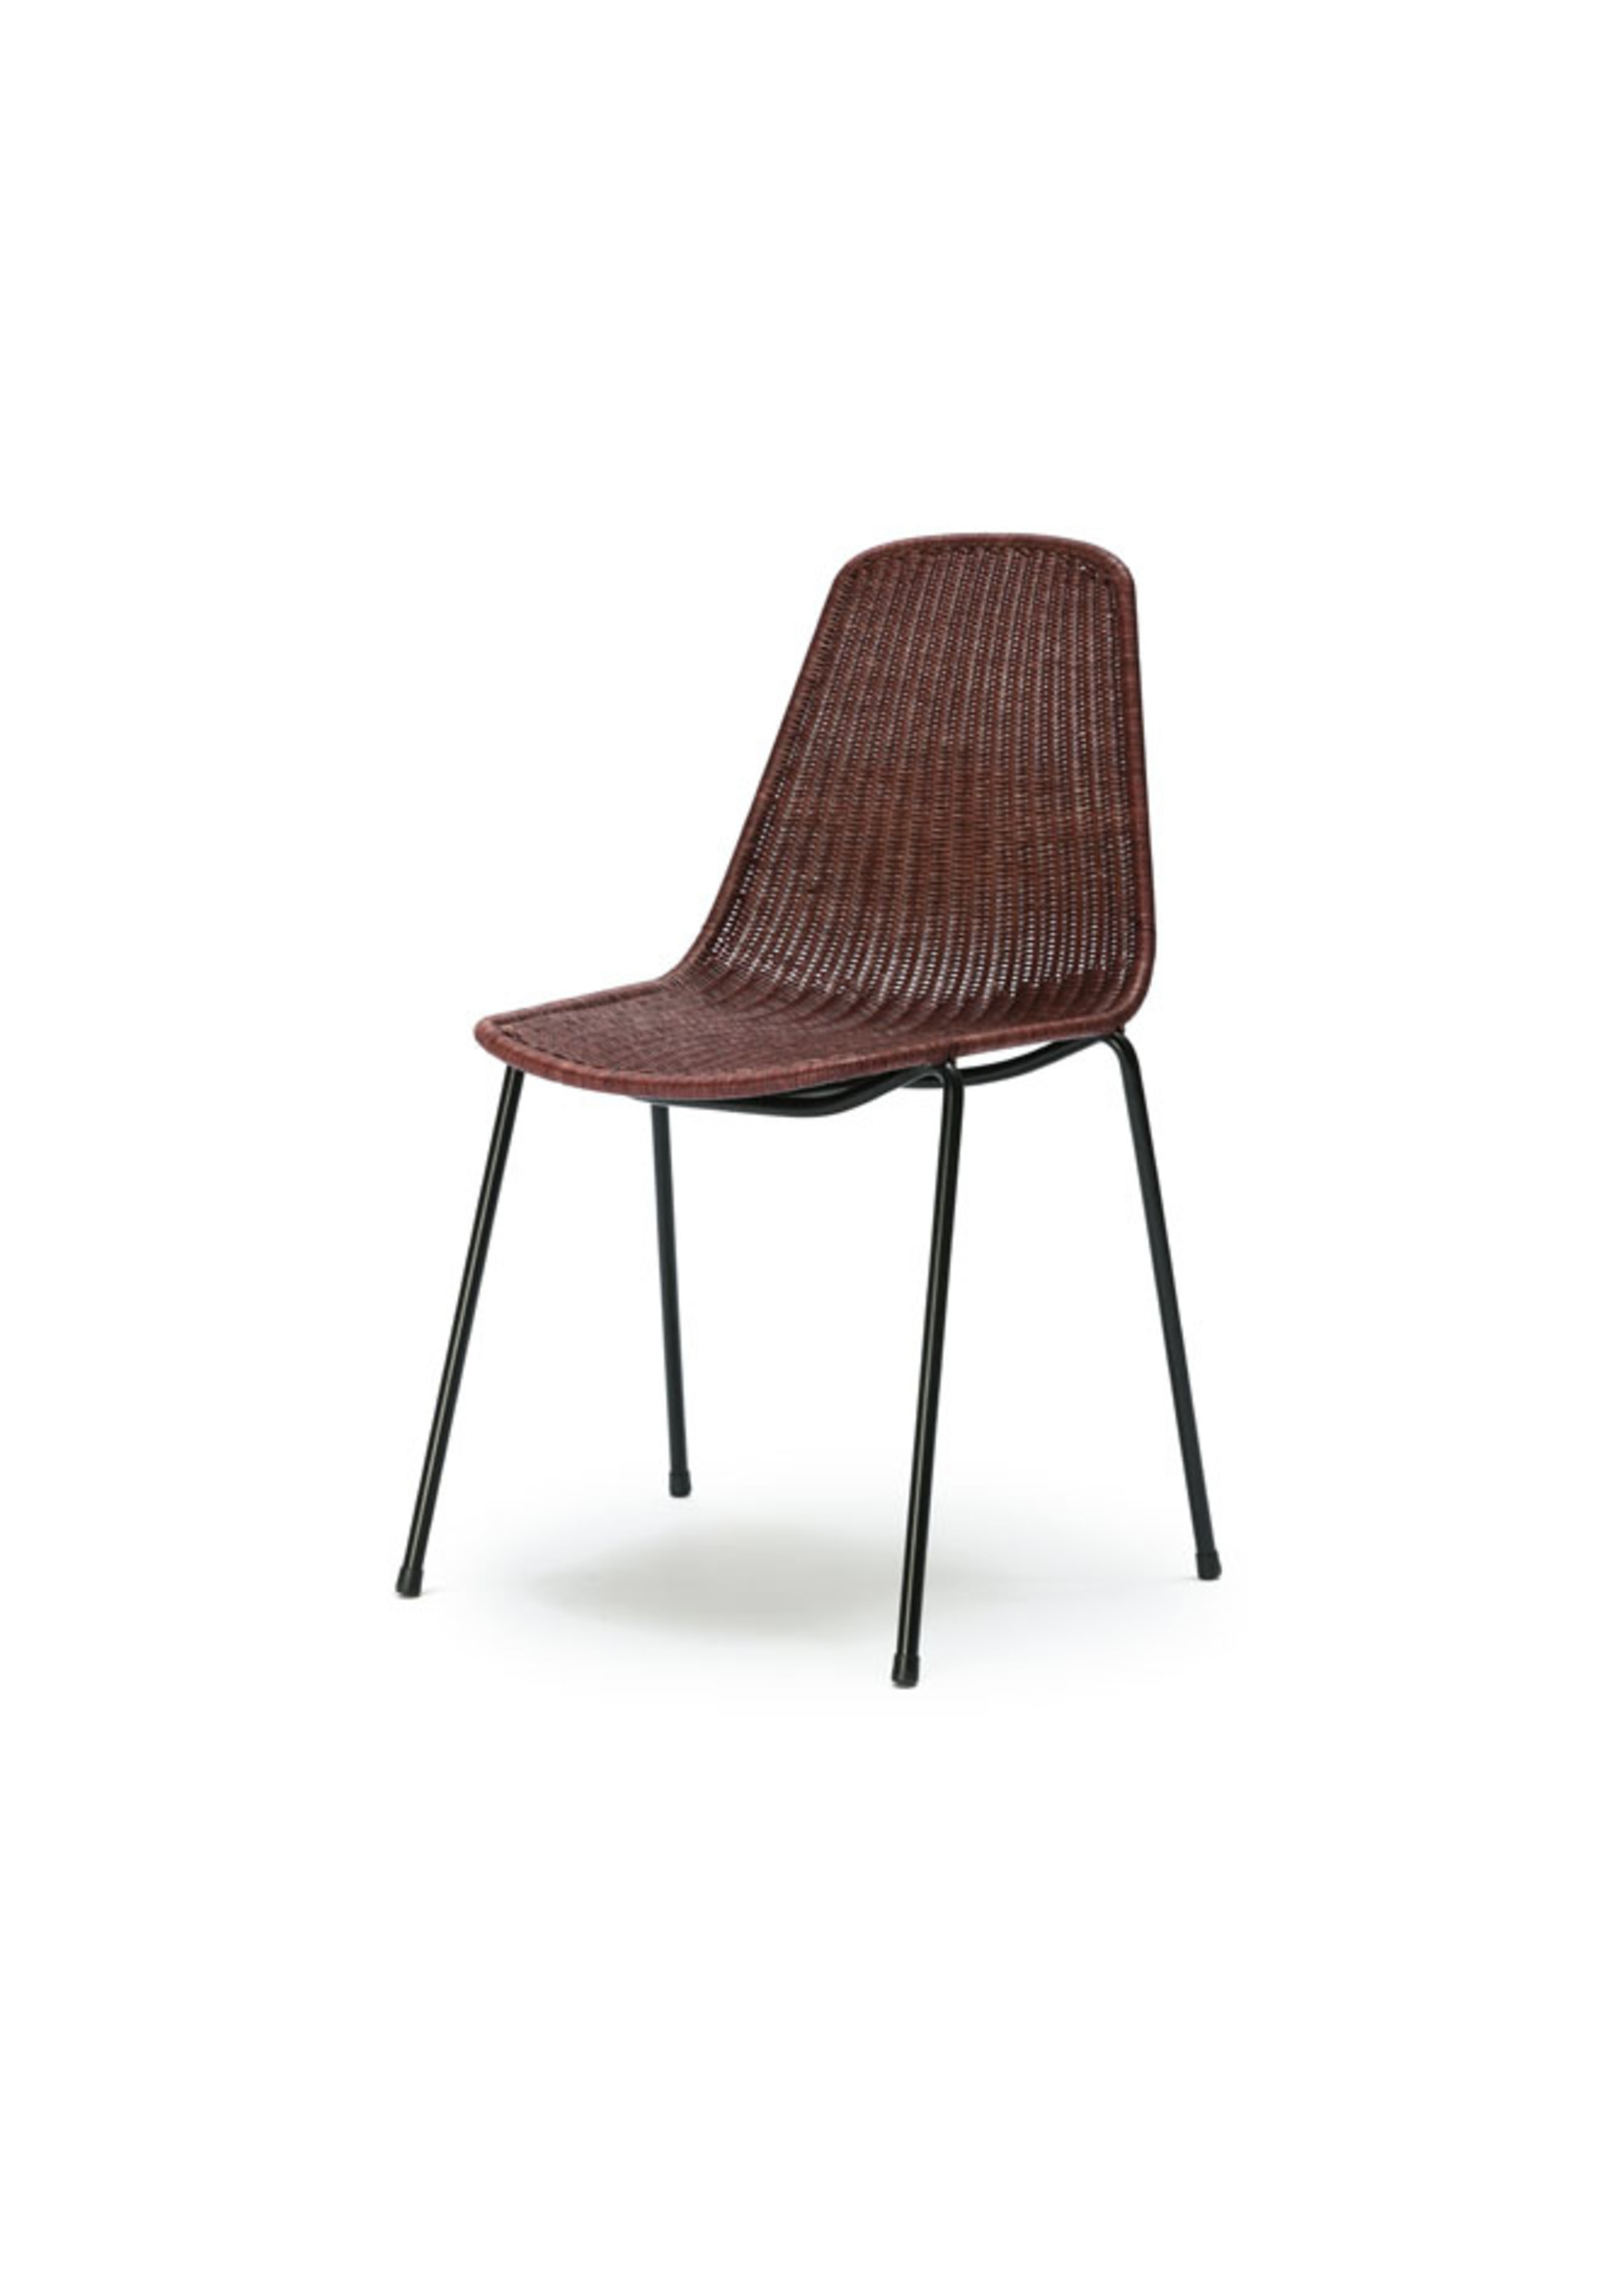 Feelgooddesign Feelgood design indoor basket chair